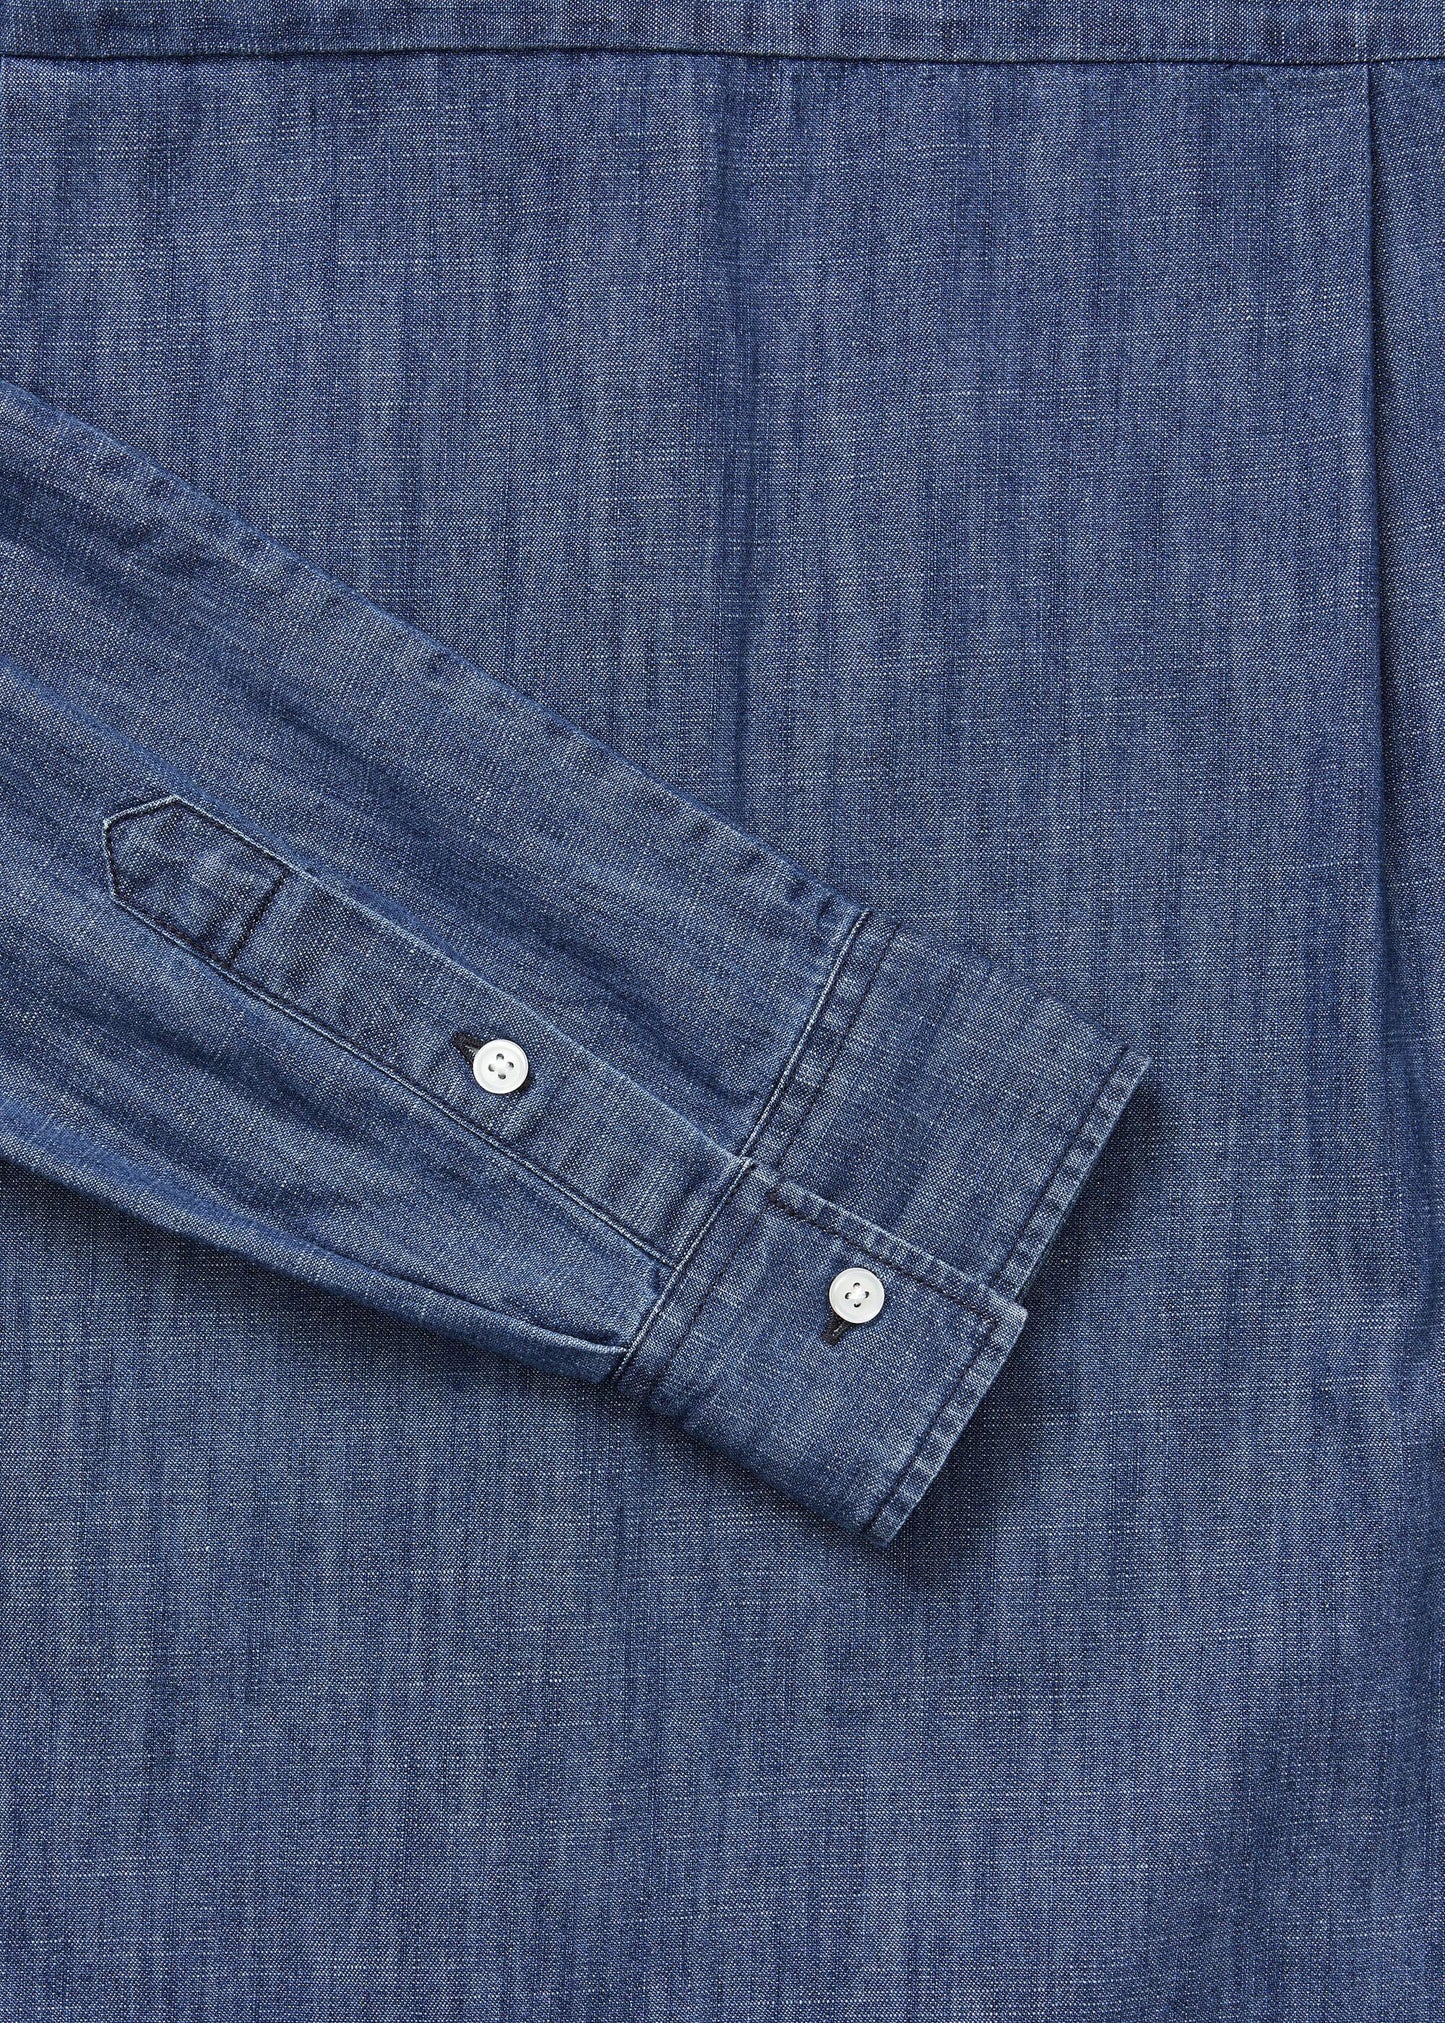 Aiayu "Lynette Shirt Denim" Blue Jeans